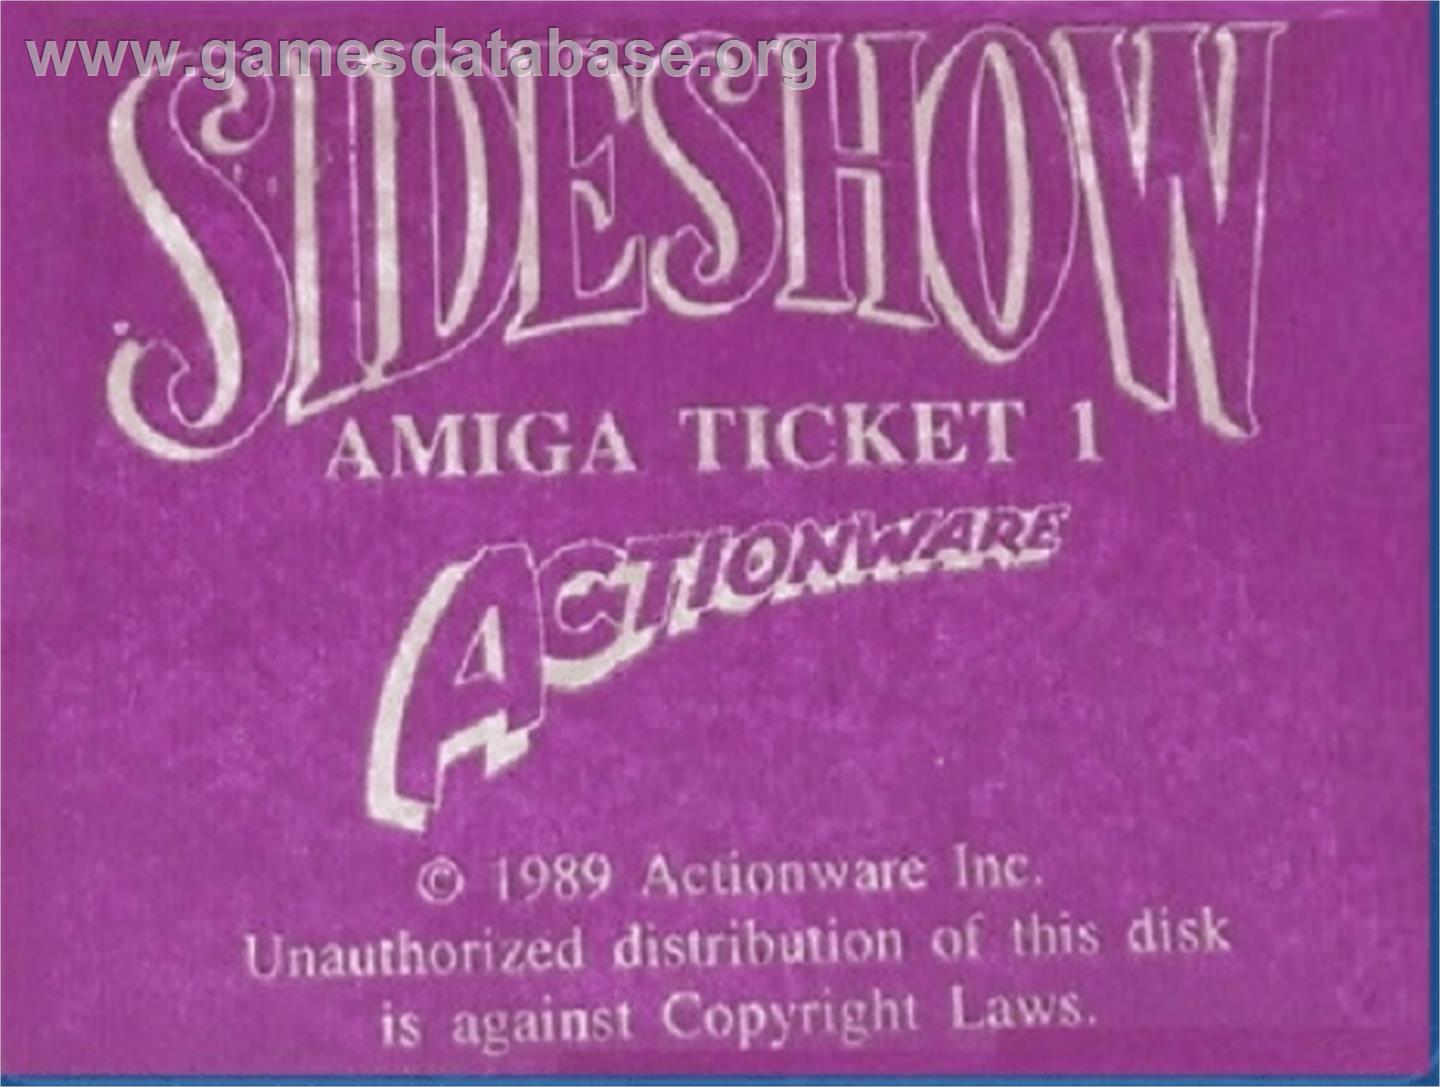 SideShow - Commodore Amiga - Artwork - Cartridge Top